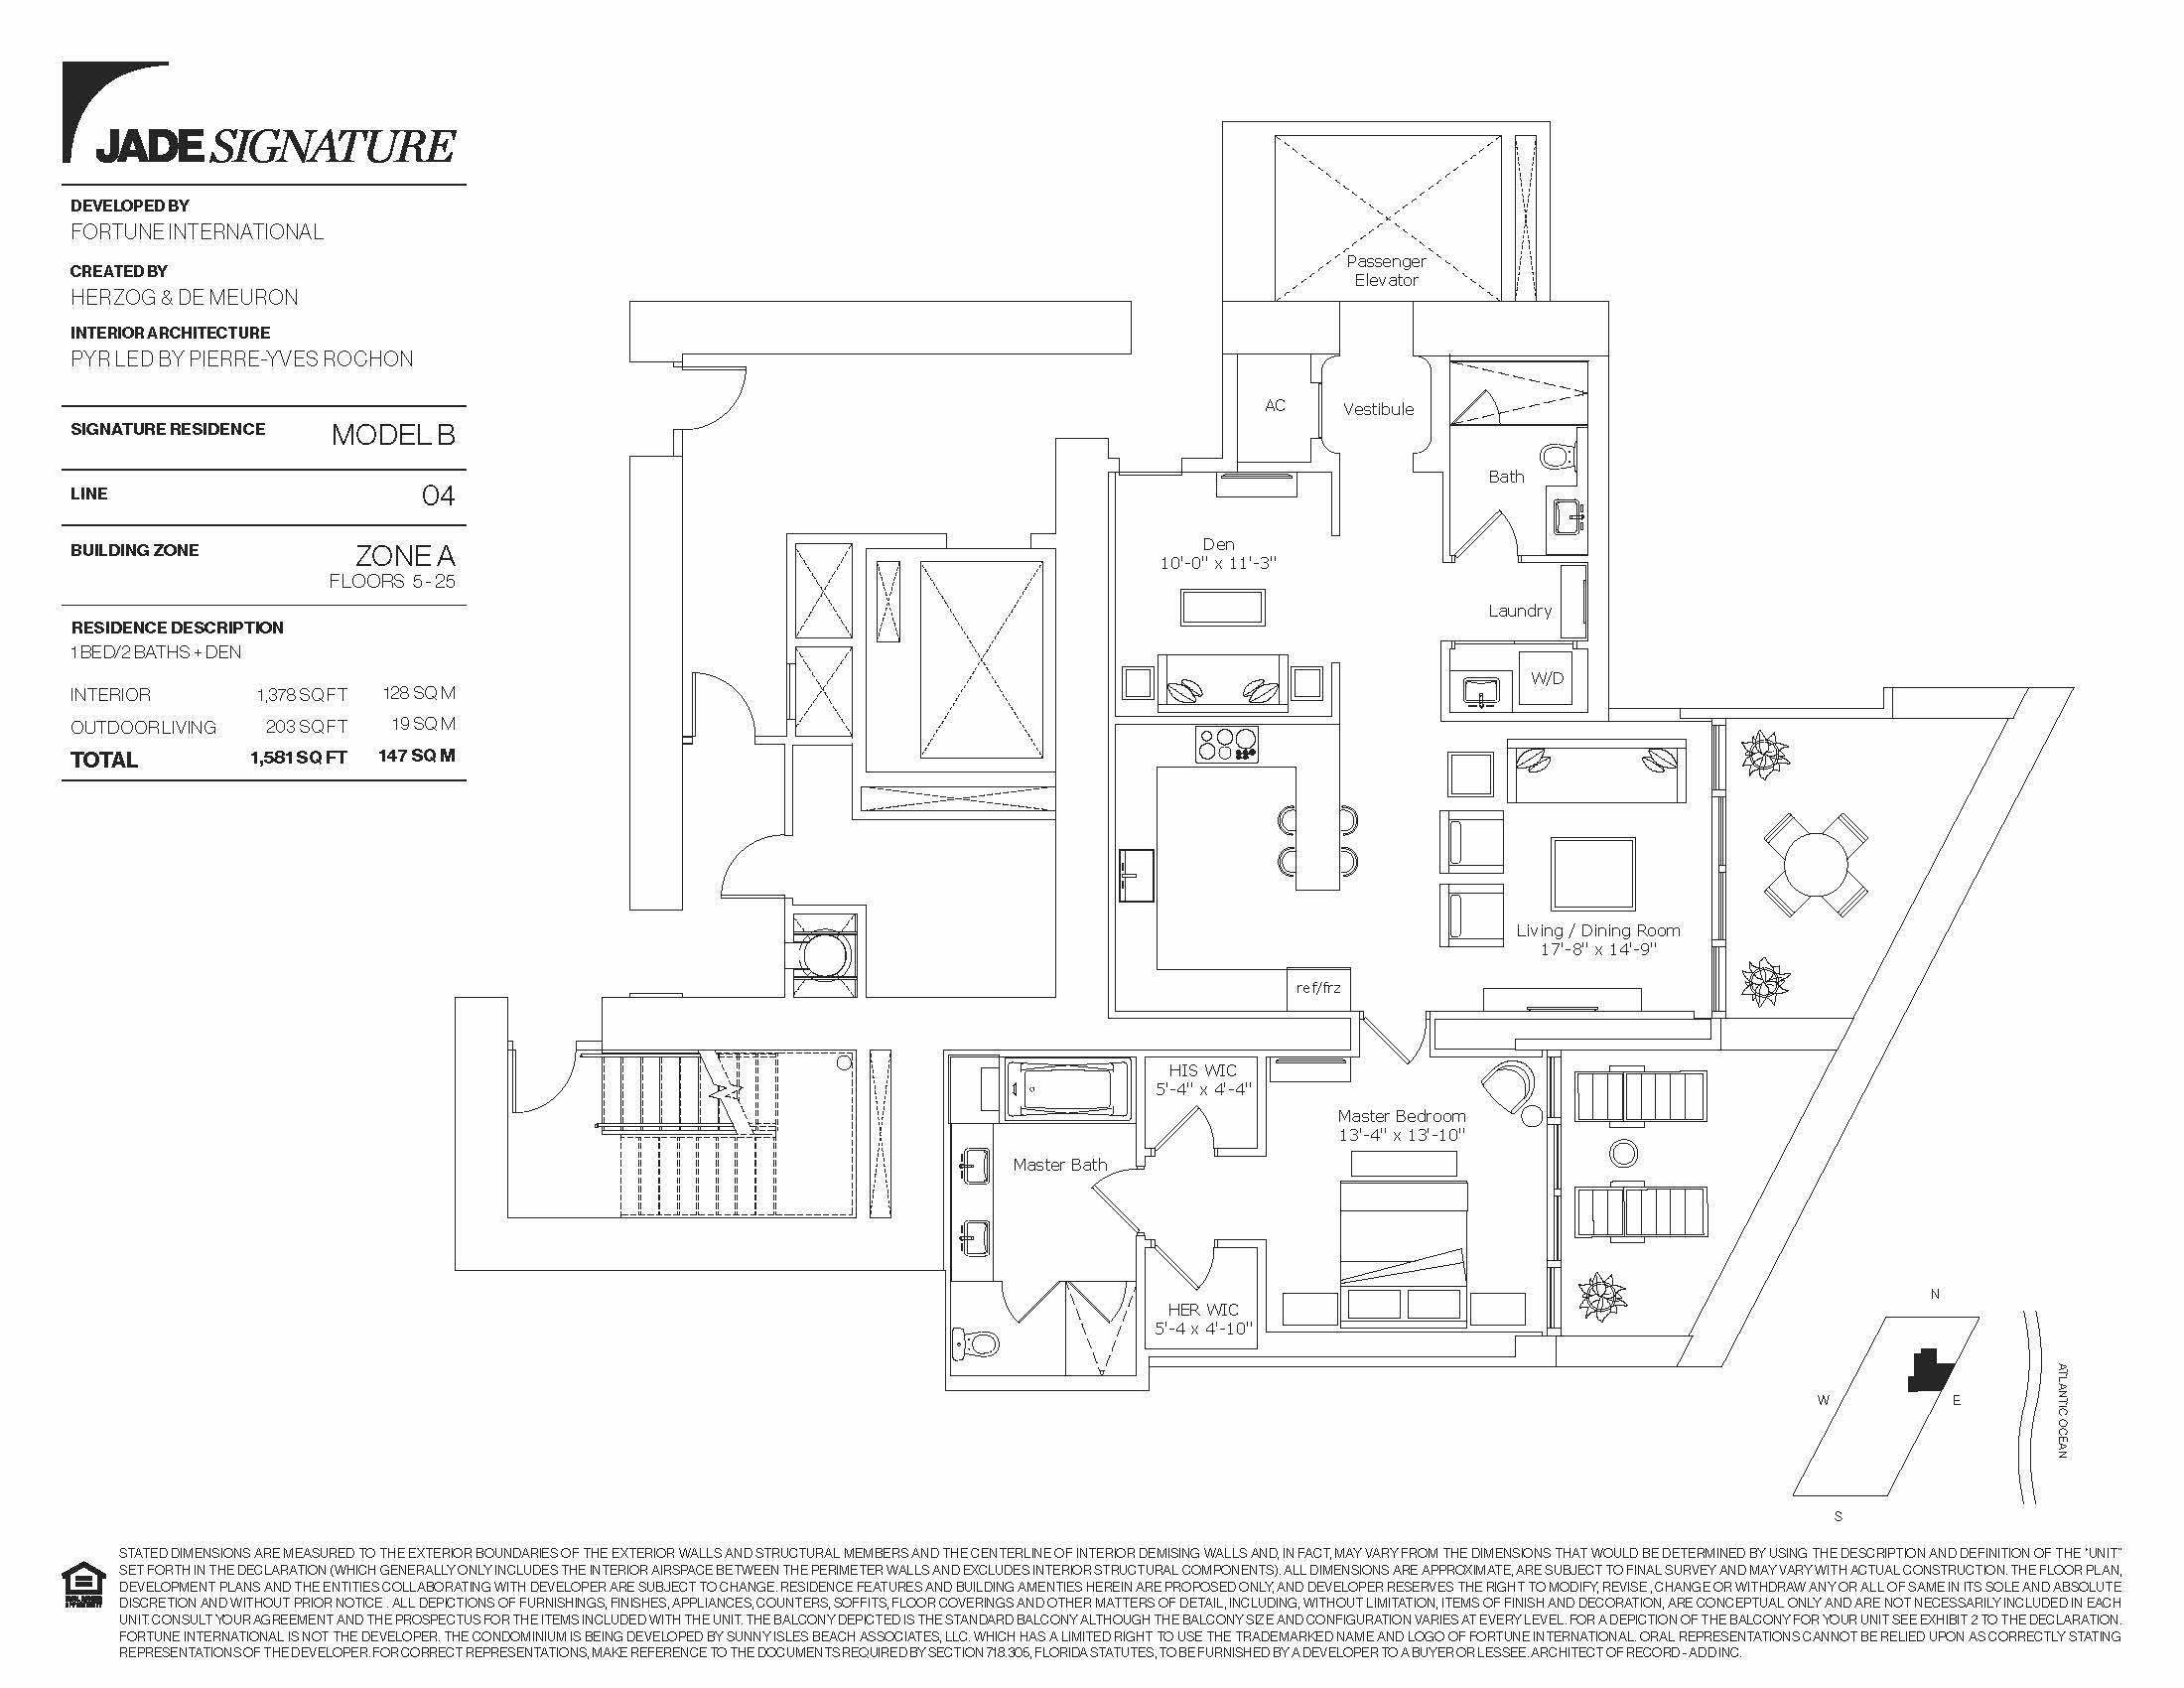 Floor Plan for Jade Signature Sunny Isles Floorplans, Model B